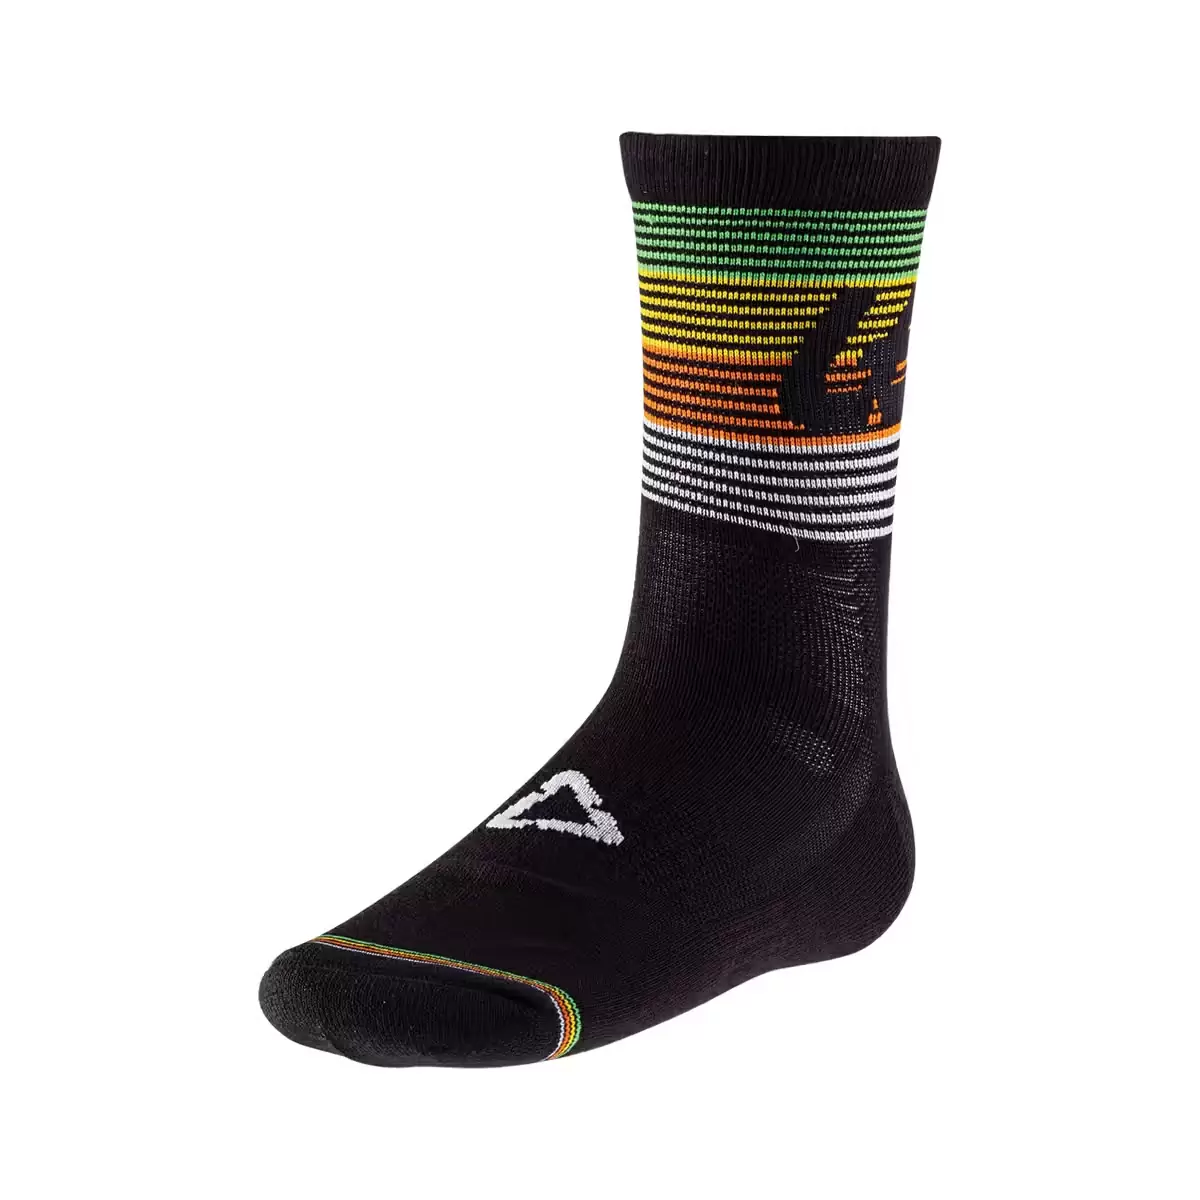 Reinforced Mtb Socks Black Size L/XL (43-48) - image